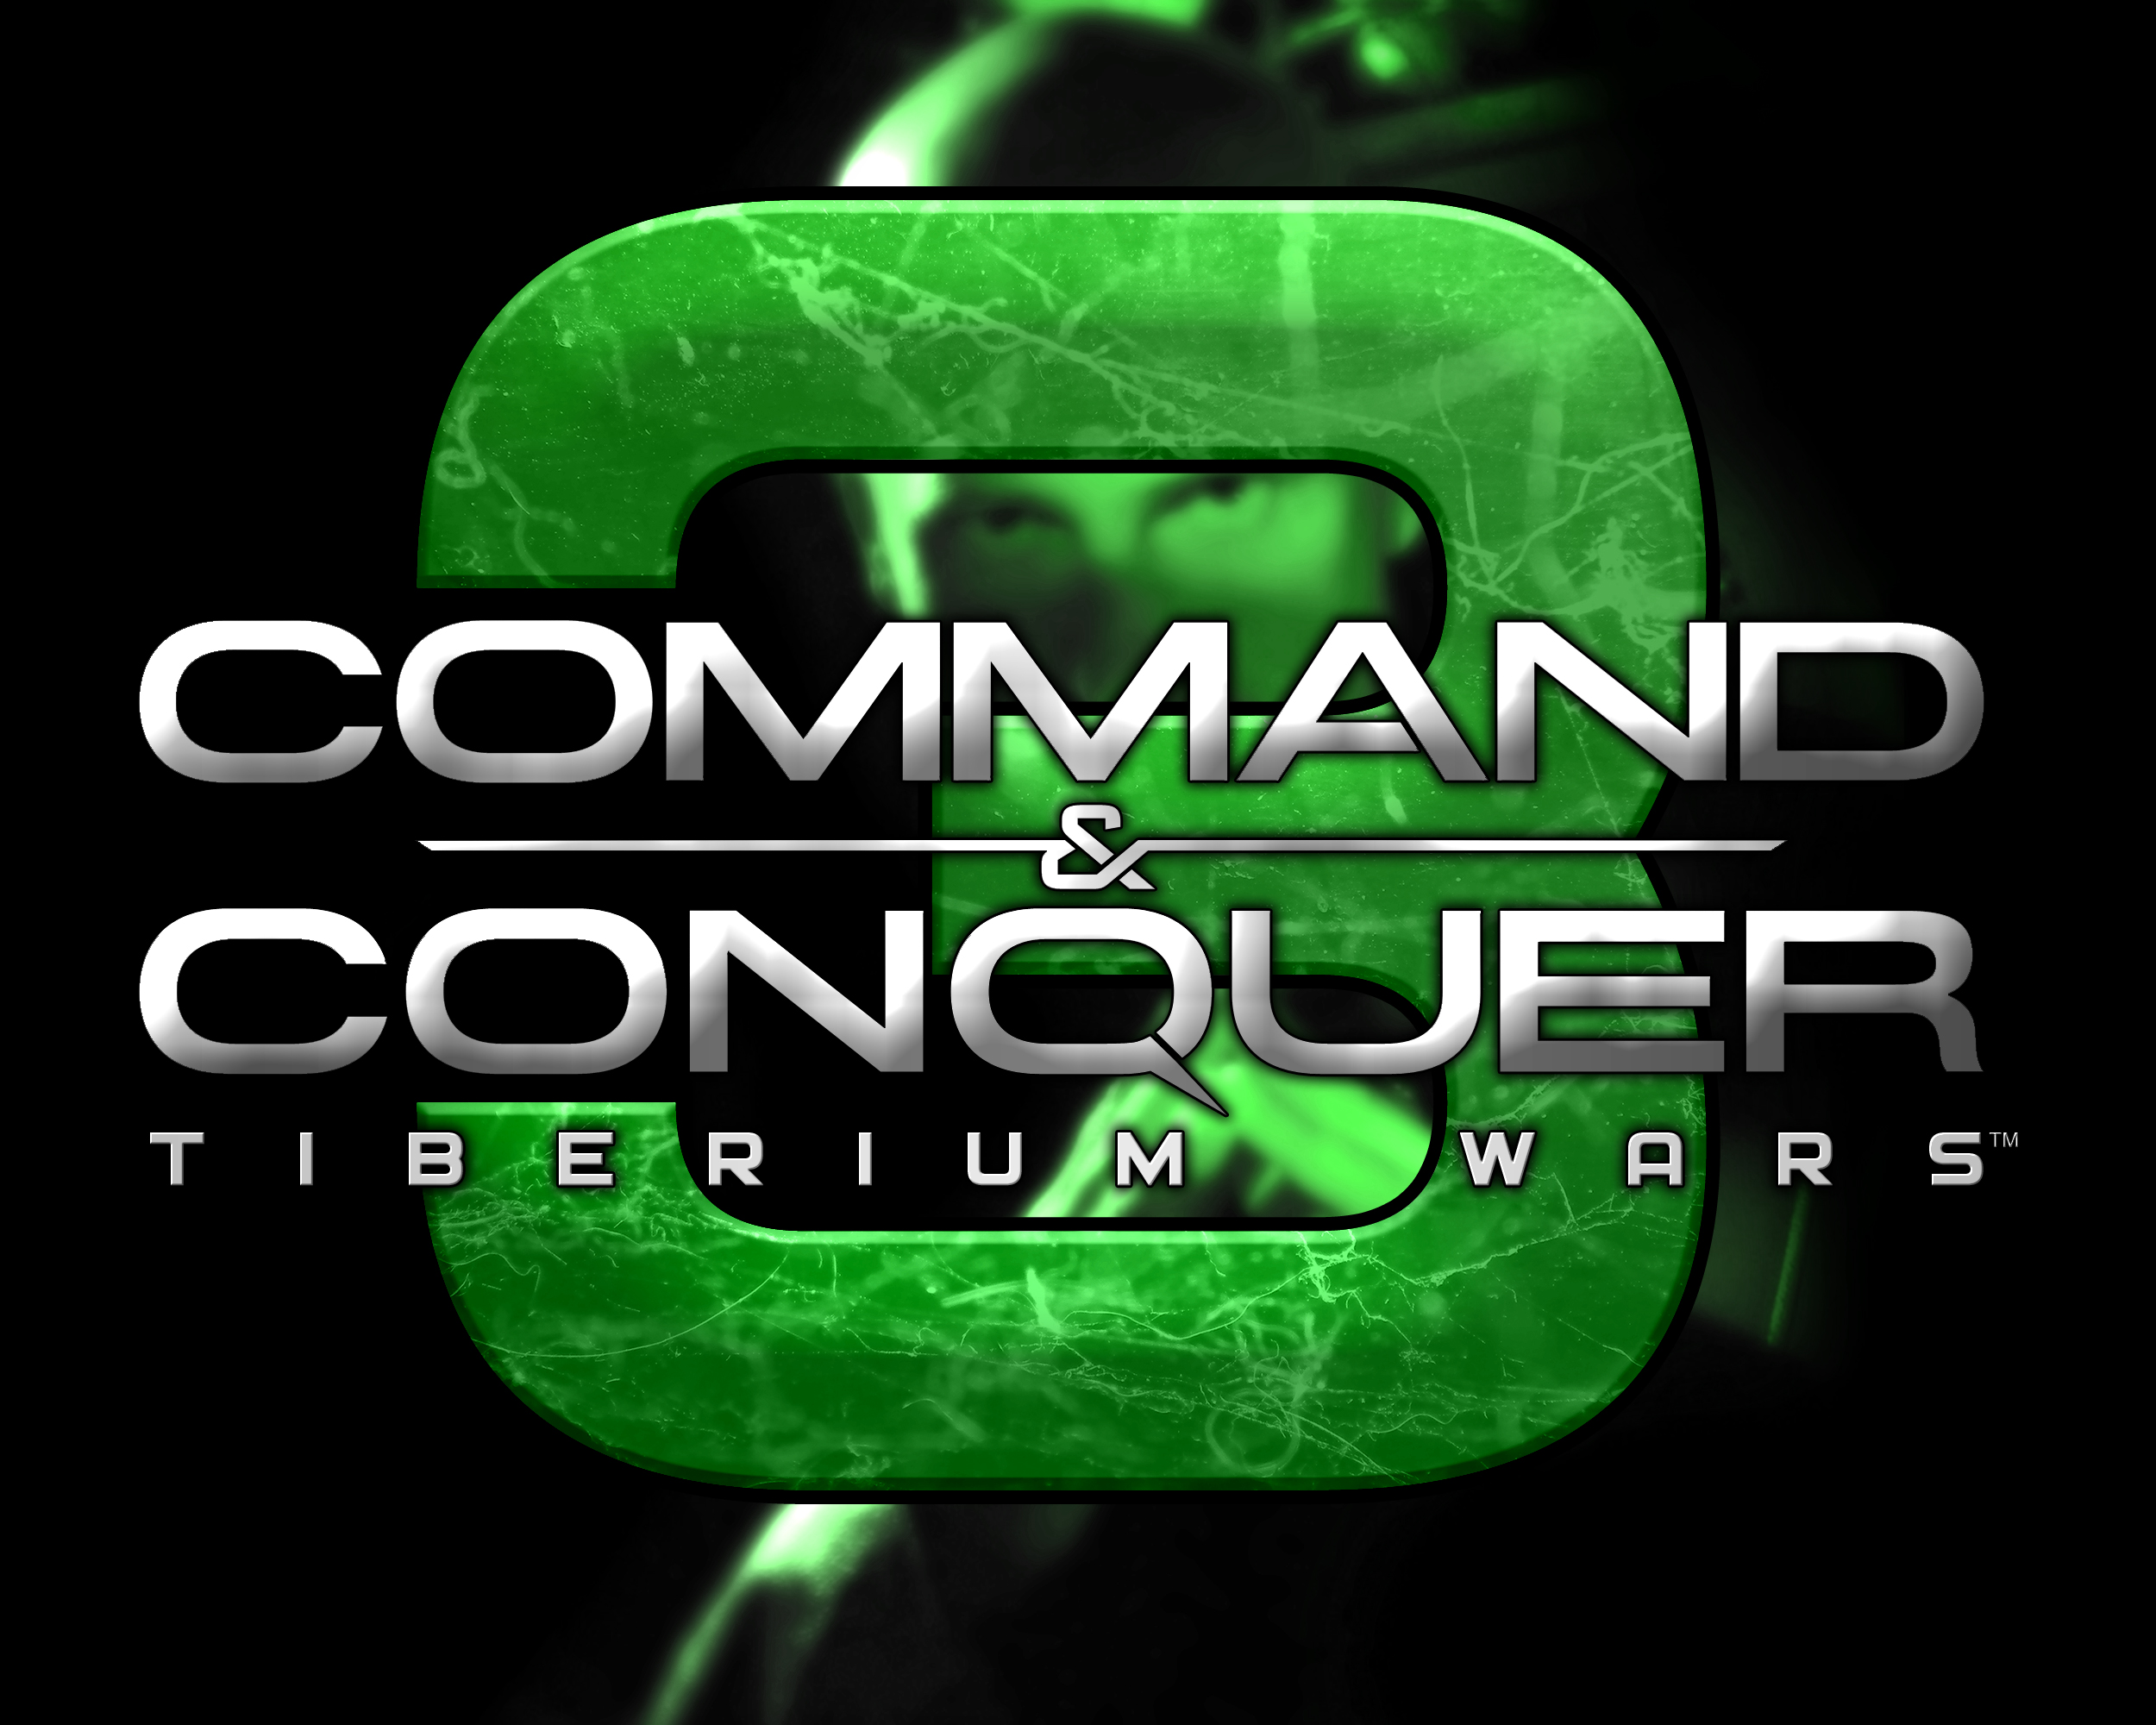 Command And Conquer 3 Tiberium Wars | НОД | Выжженная земля